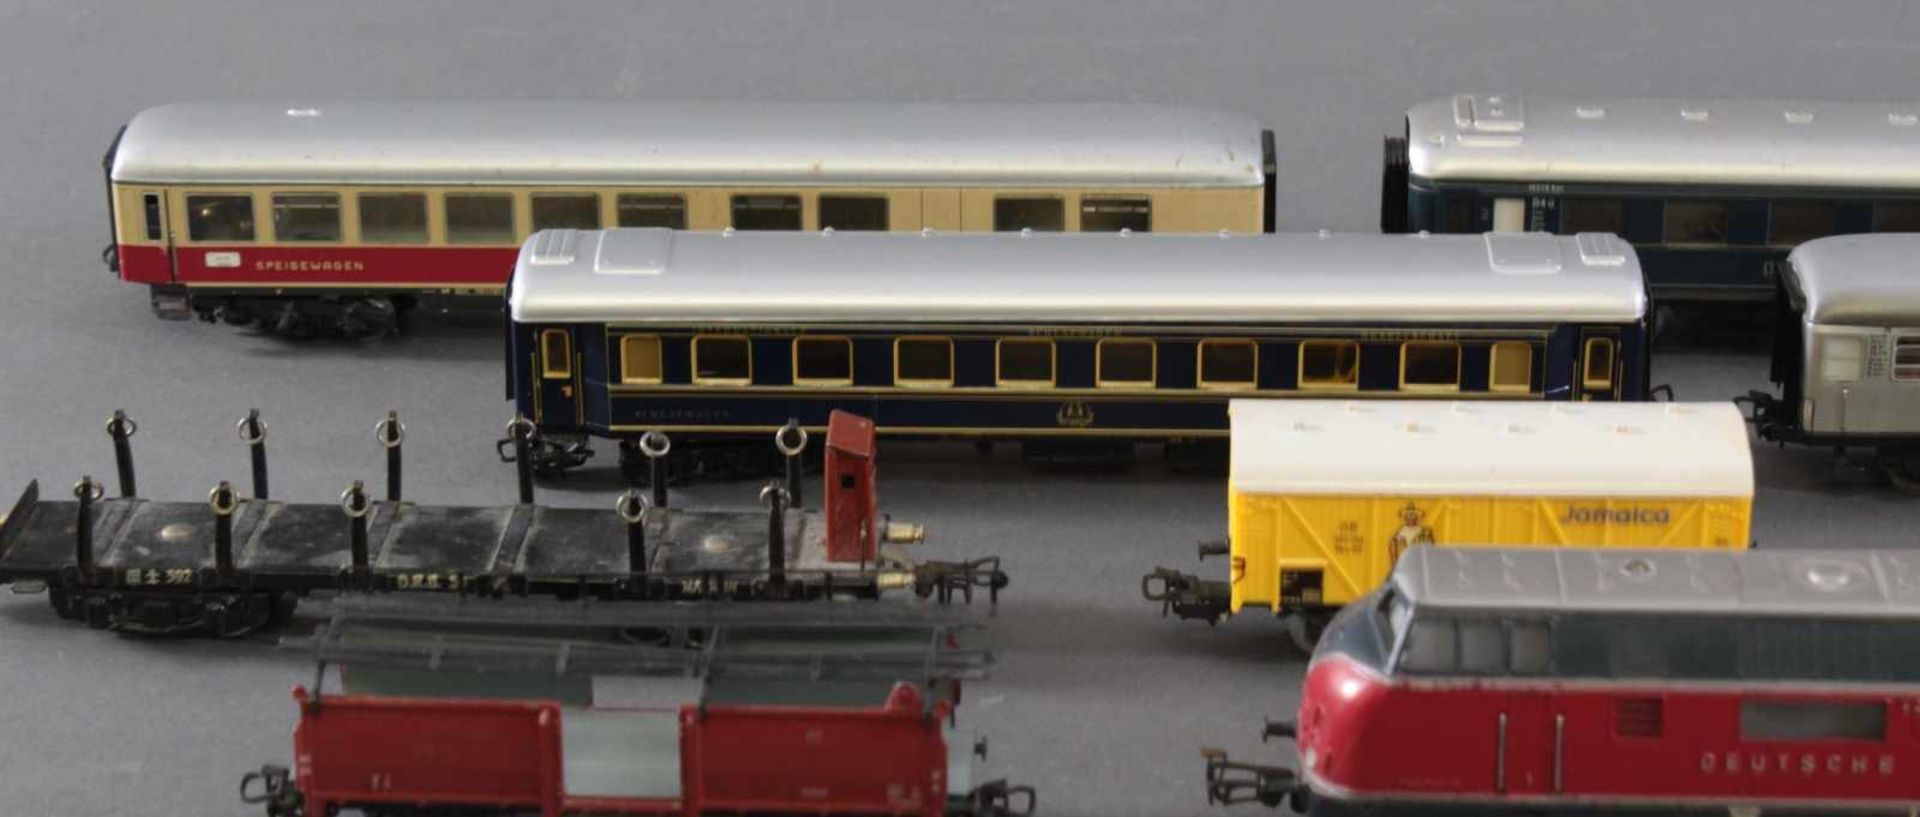 Märklin E-Lok V 2000 mit 5 Güter-, 2 Personenwaggons und einem Speisewagen, Spur H0E-Lok in rot, 5 - Image 2 of 3